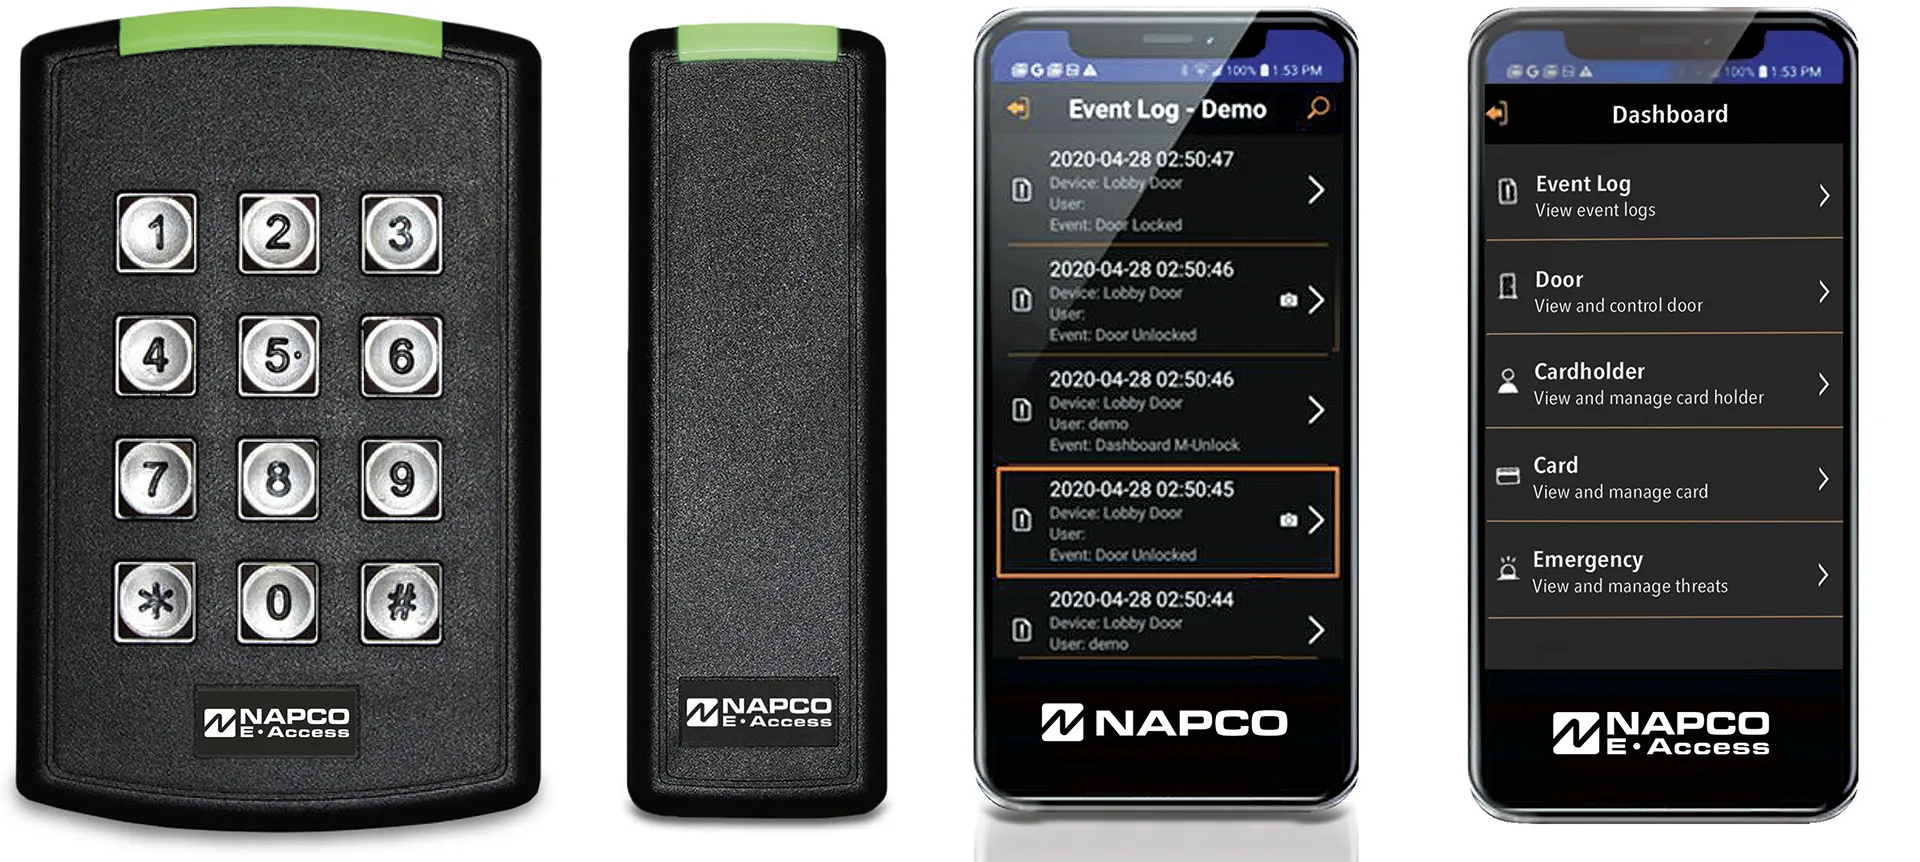 Napco Access control panel sensor and smartphone app